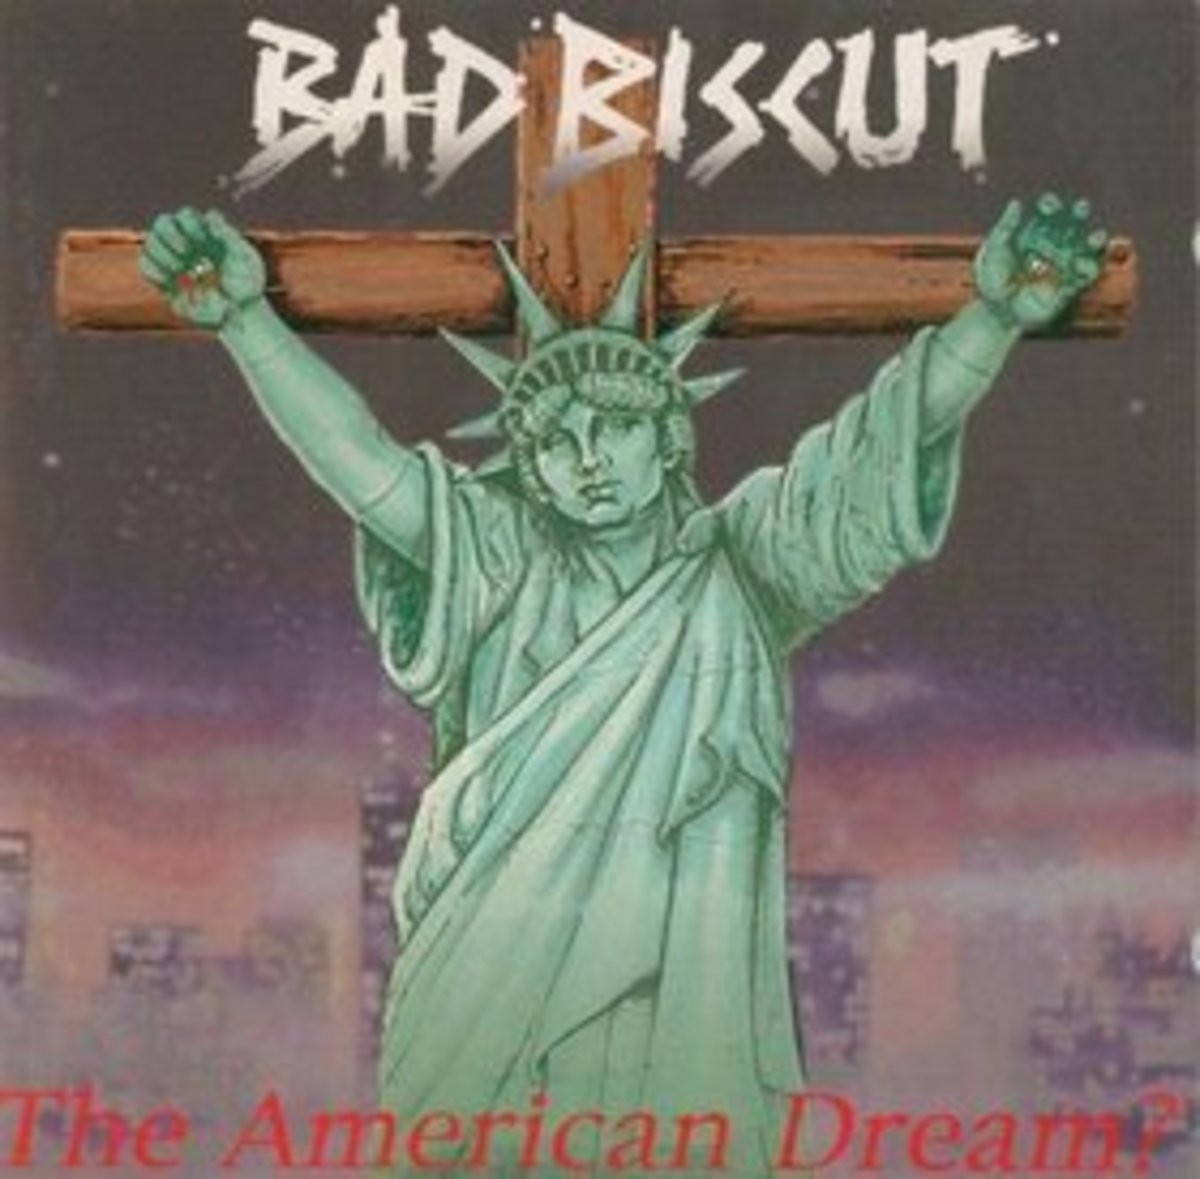 "The American Dream" Album Art (Another Version)